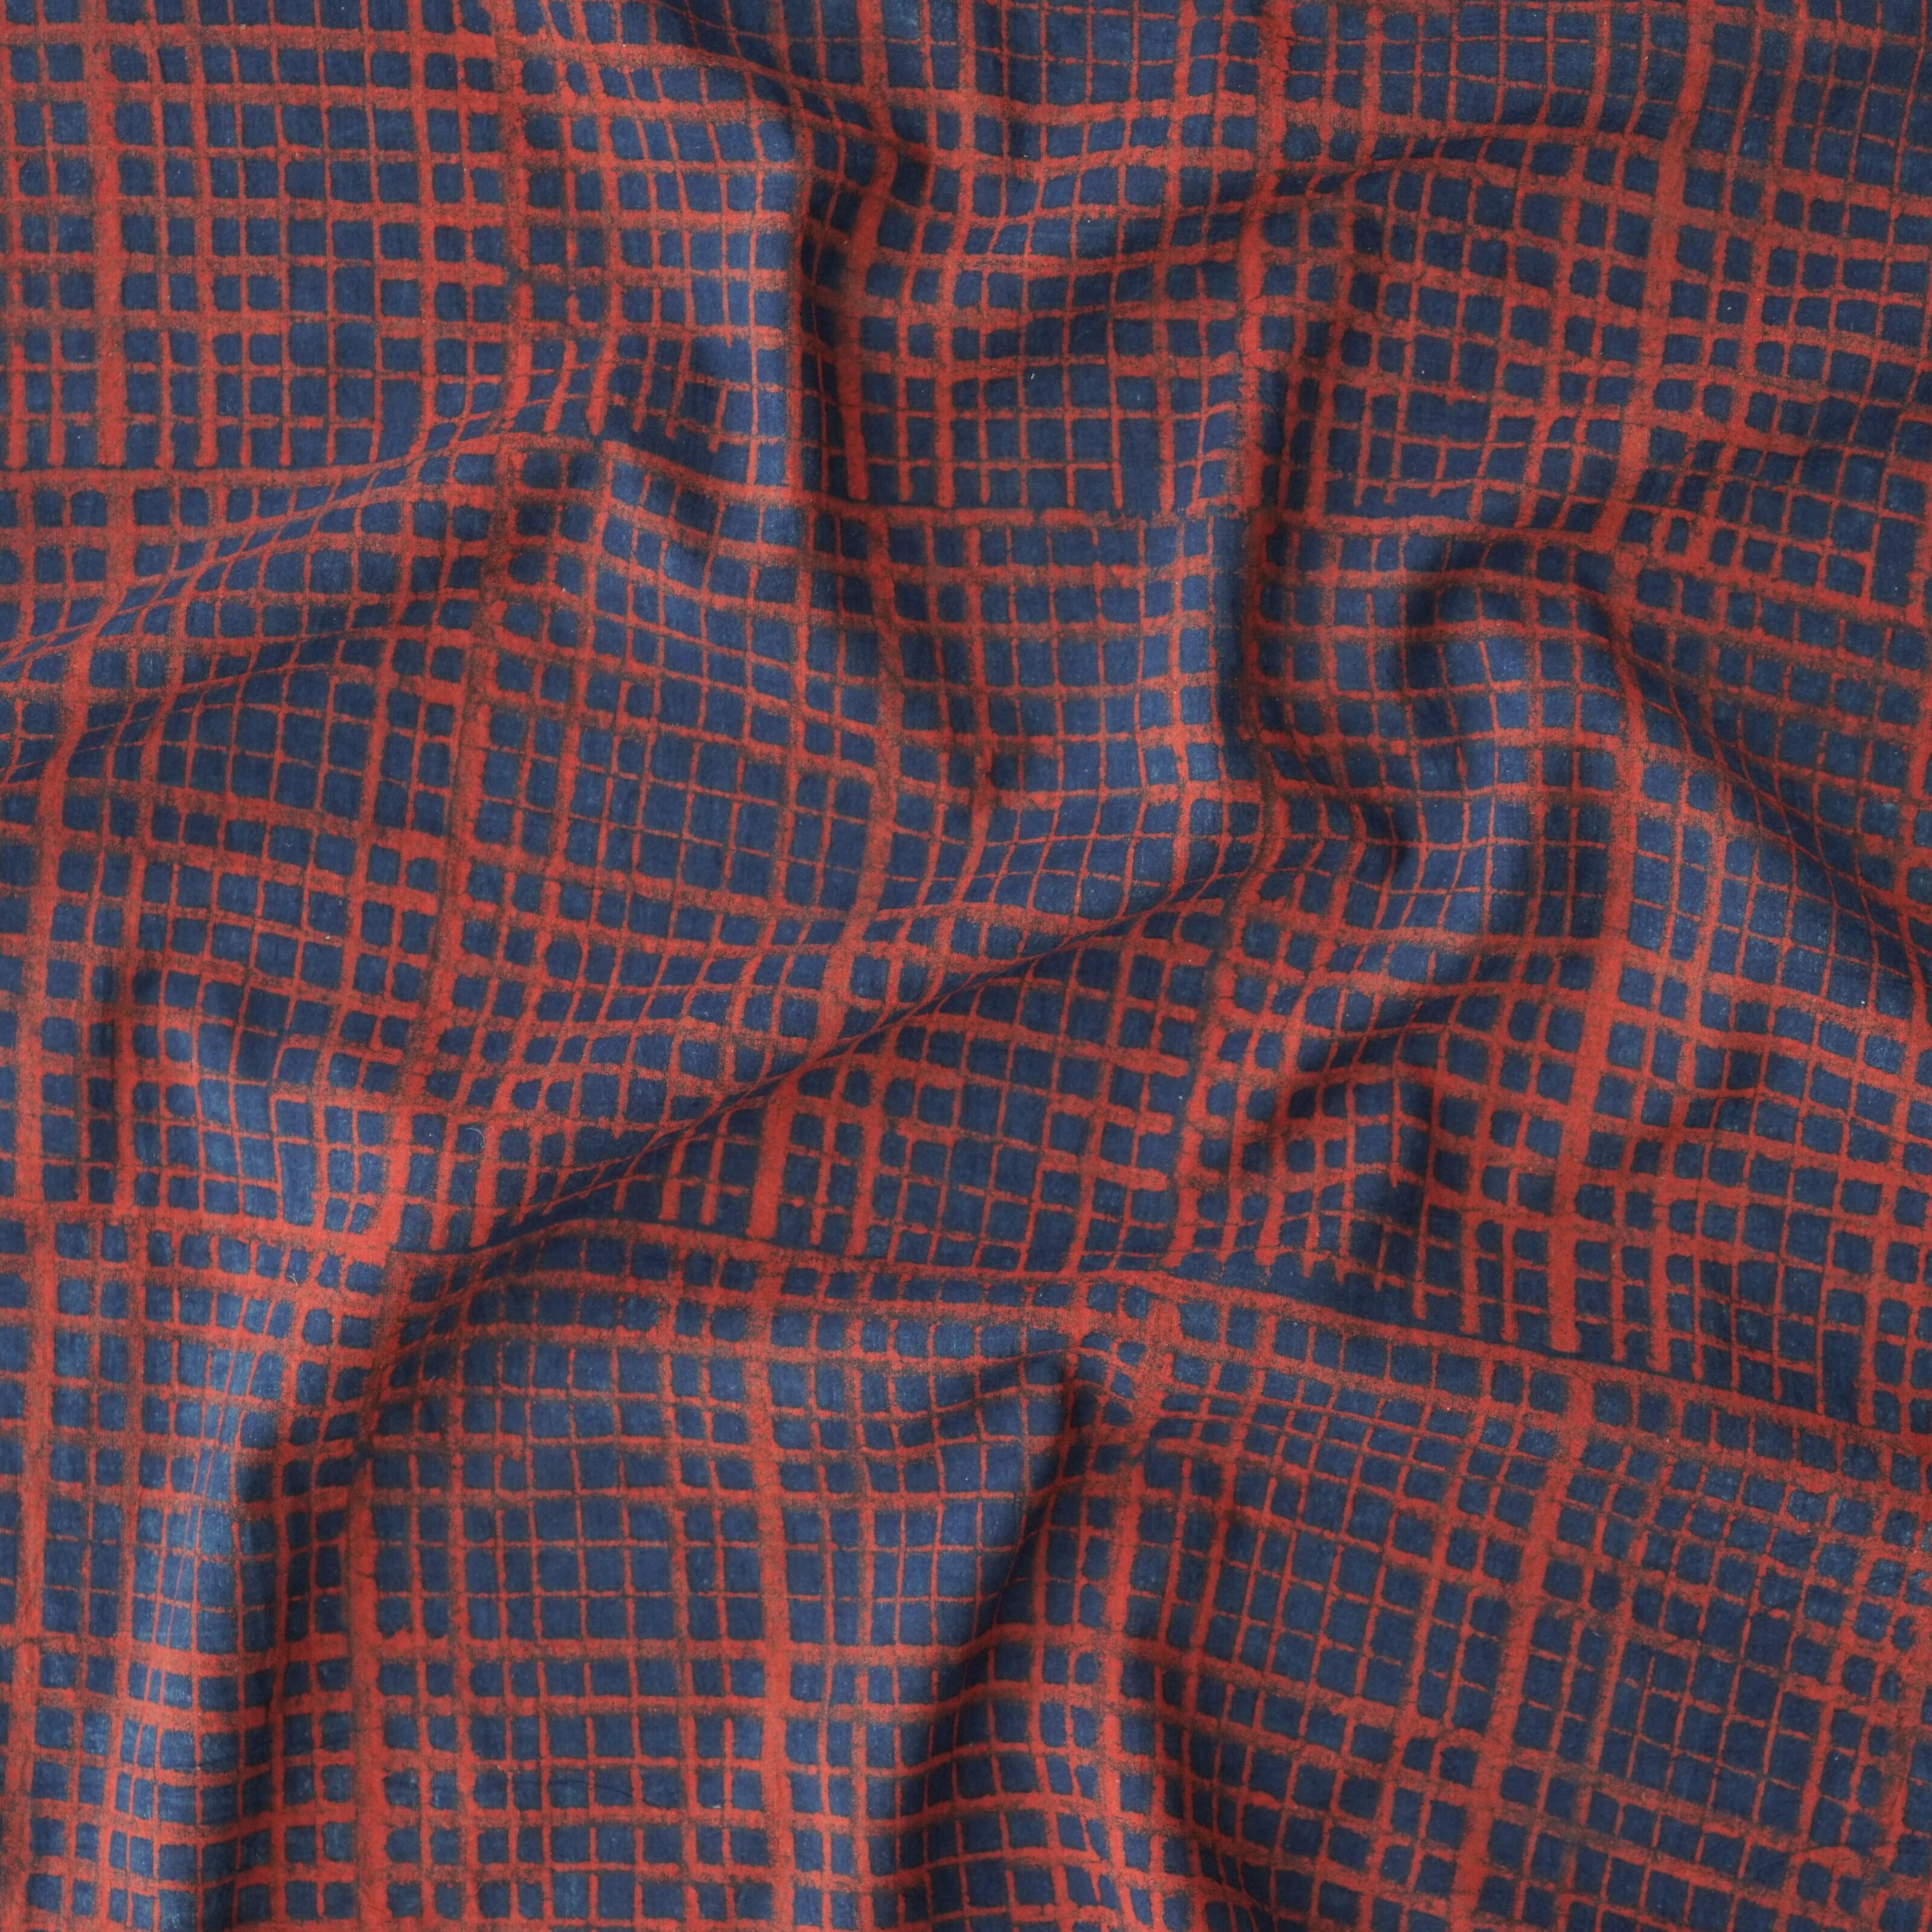 100% Block-Printed Cotton Fabric from India - Ajrak - Indigo Alizarin Slubbed Grid Print - Contrast